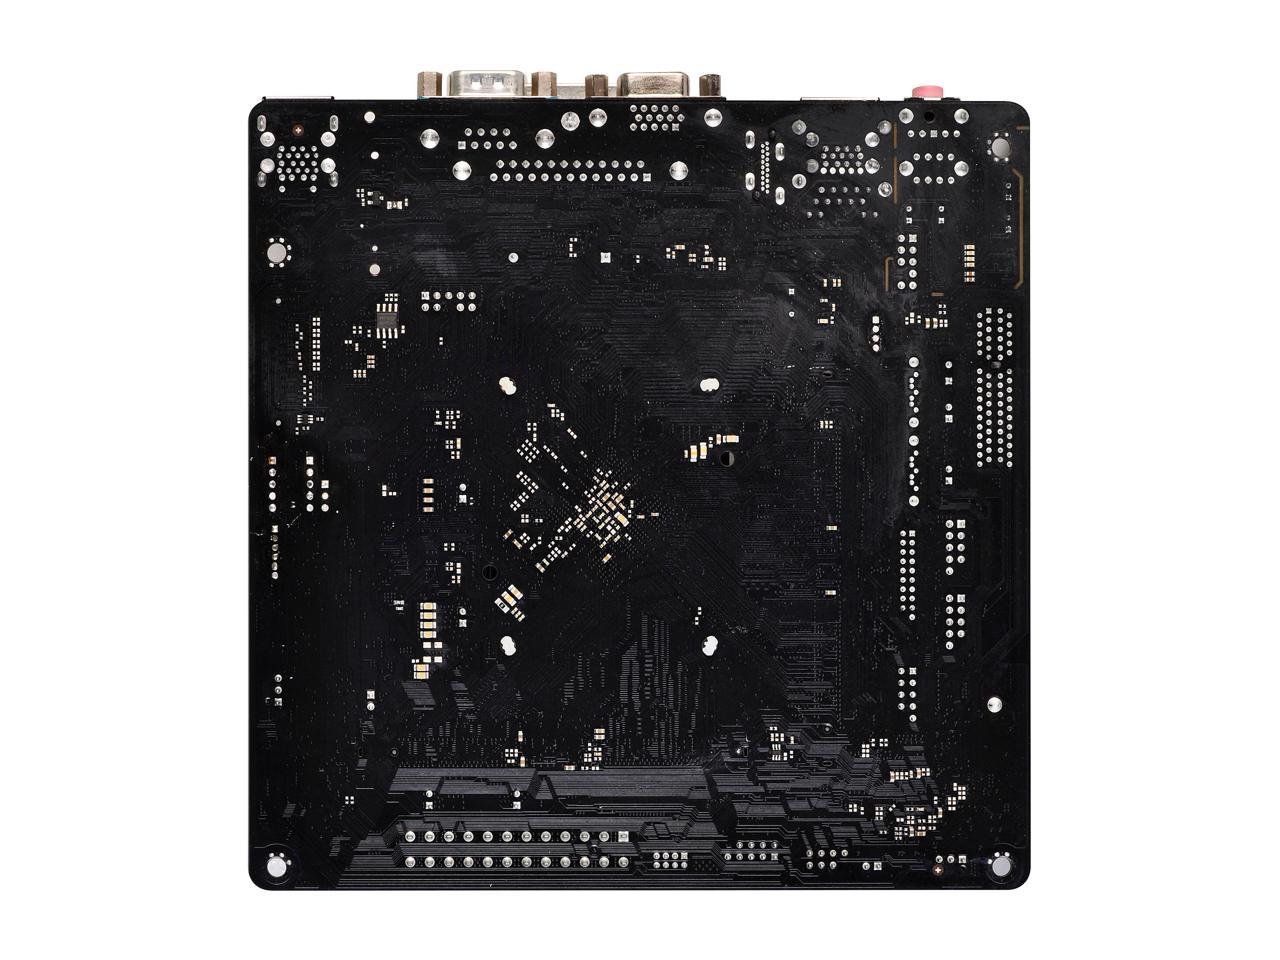 ASRock J4005B-ITX Intel Celeron Dual-Core Processor J4005 (up to 2.7 GHz) Mini ITX Motherboard / CPU Combo